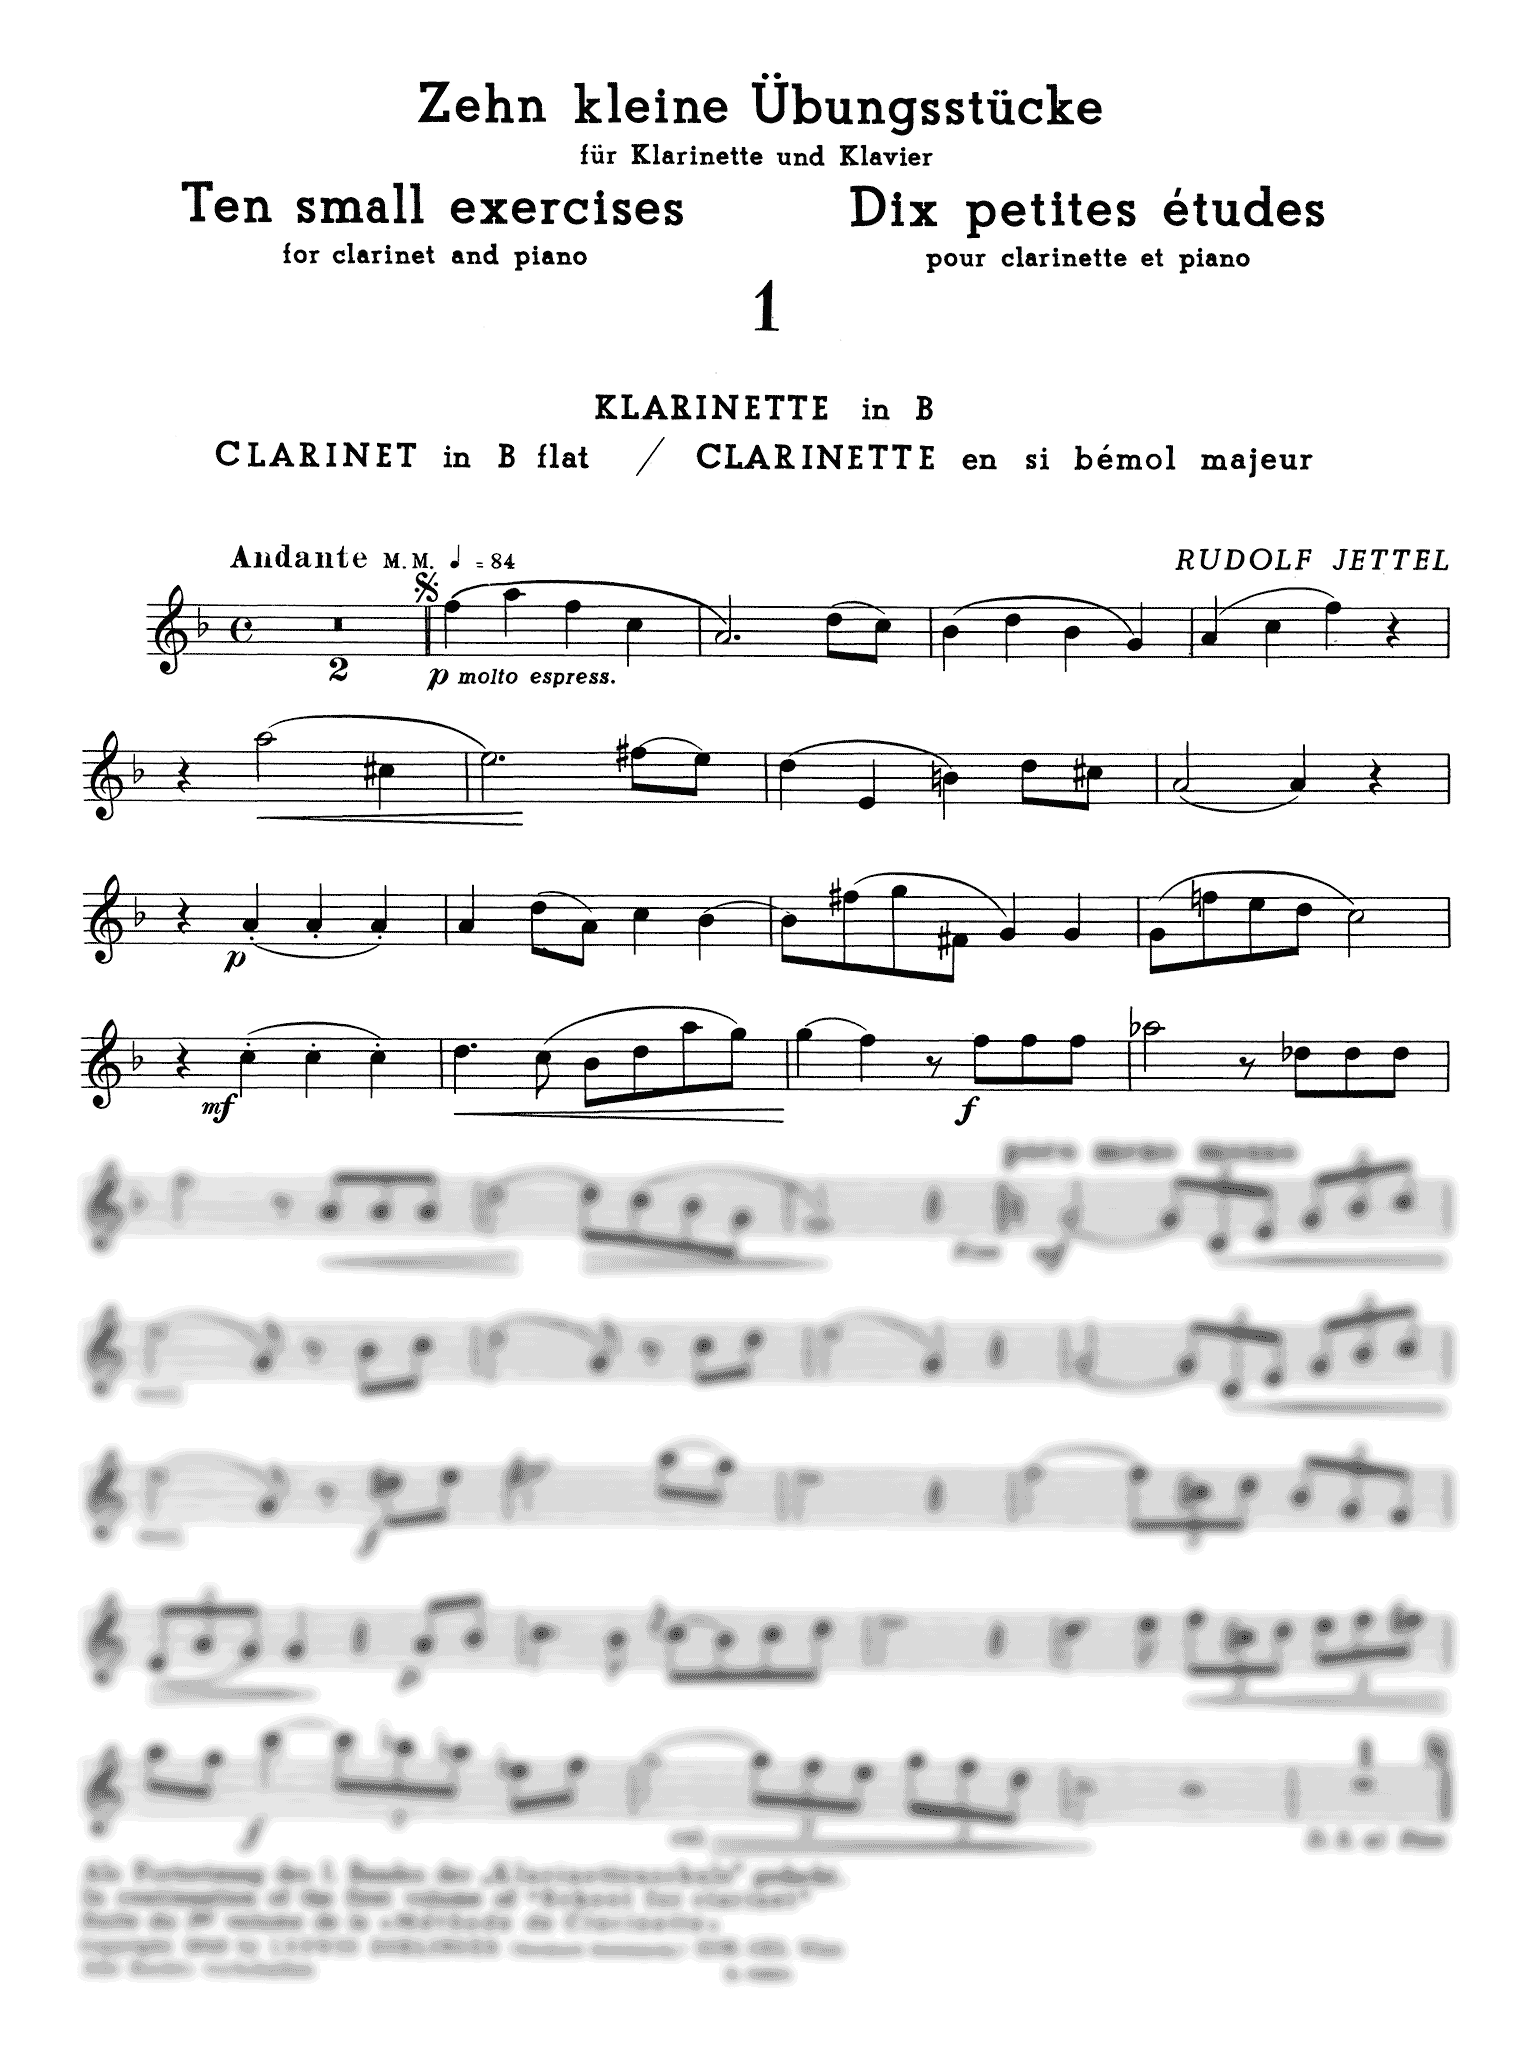 Jettel 10 Klein e Ubunsstuck clarinet part